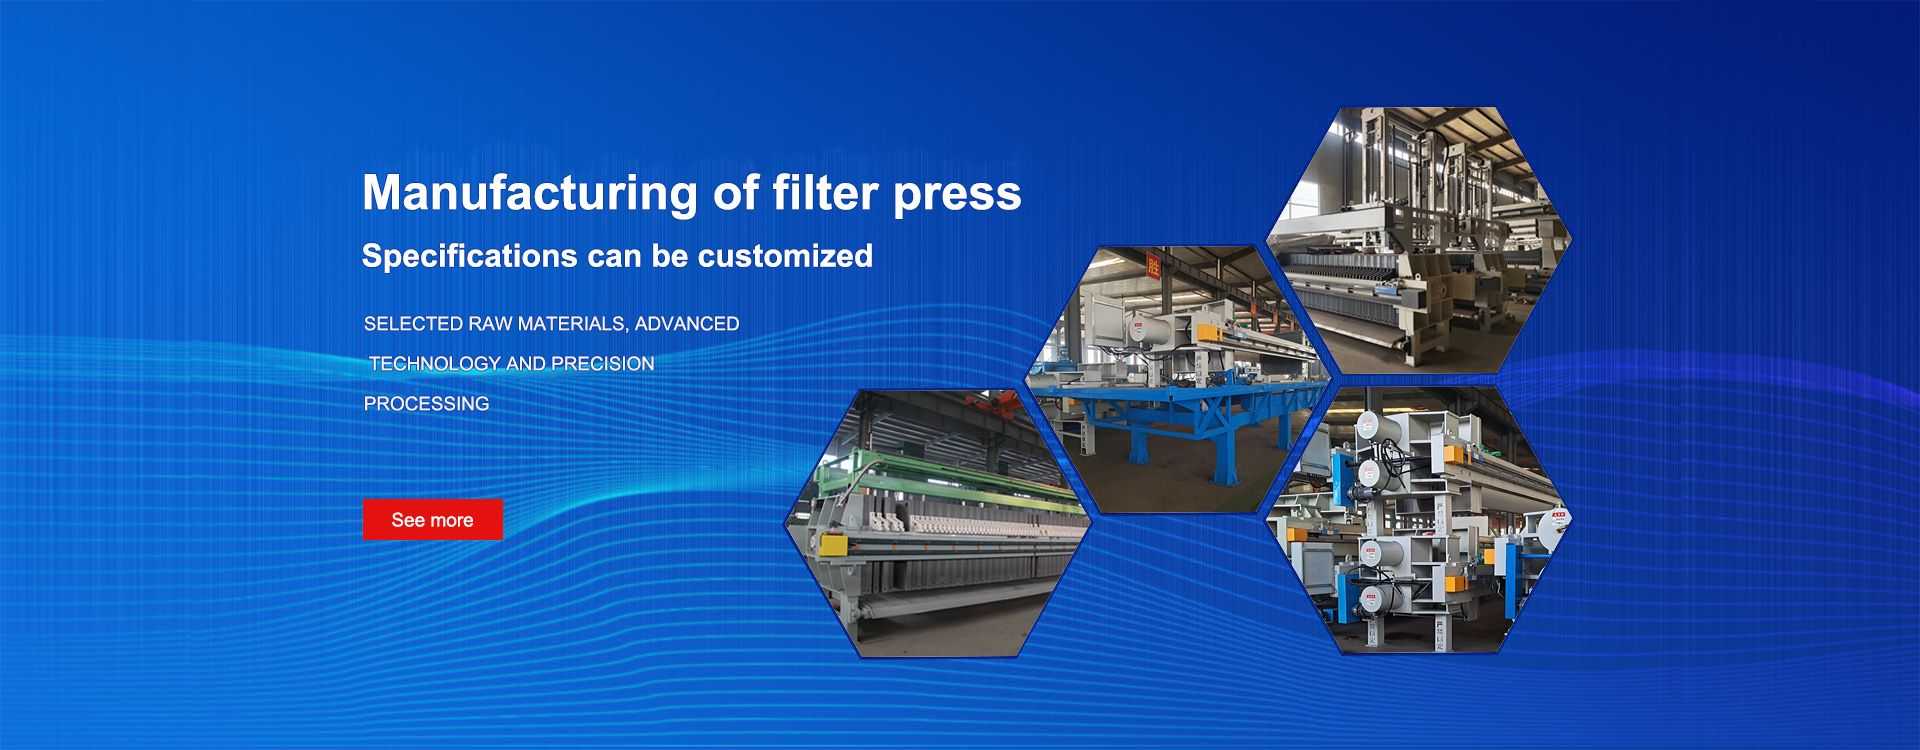 Filter press manufacturers